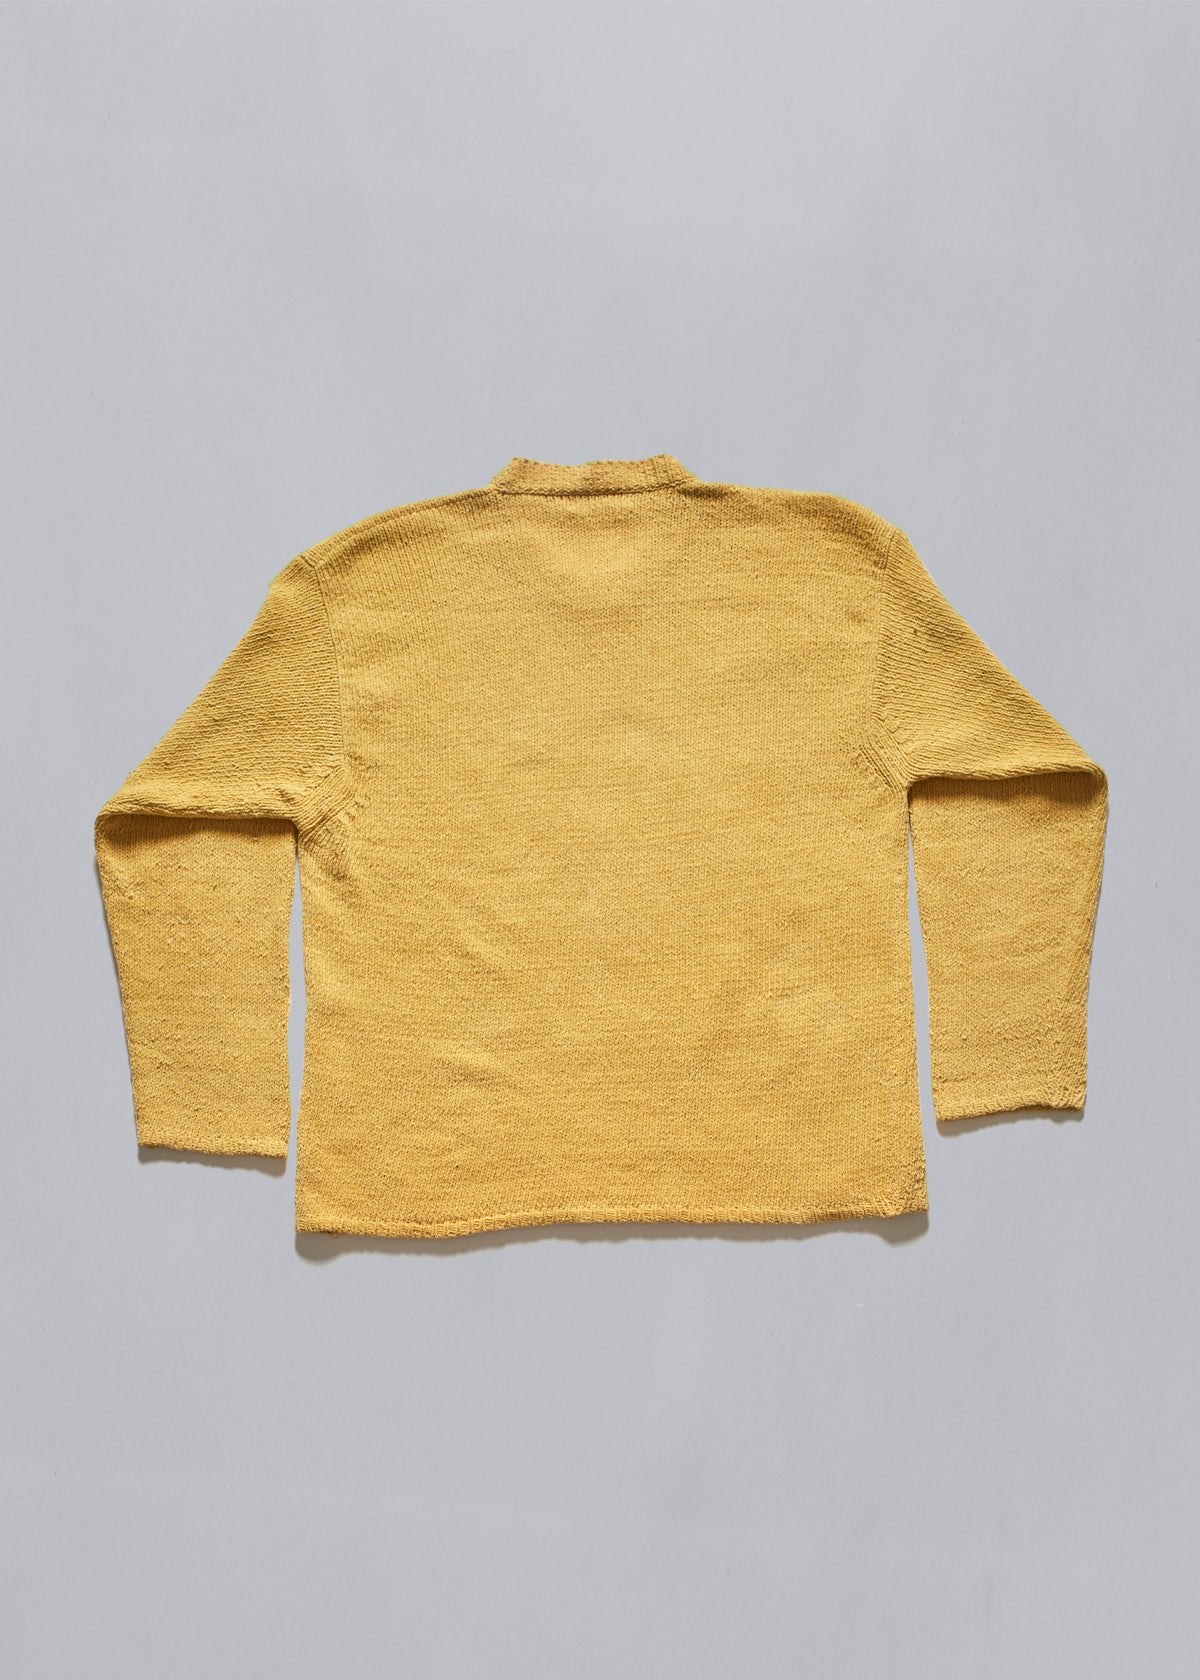 Chenille Cotton Crewneck Jumper Pastel Yellow SS1998 - The Archivist Store